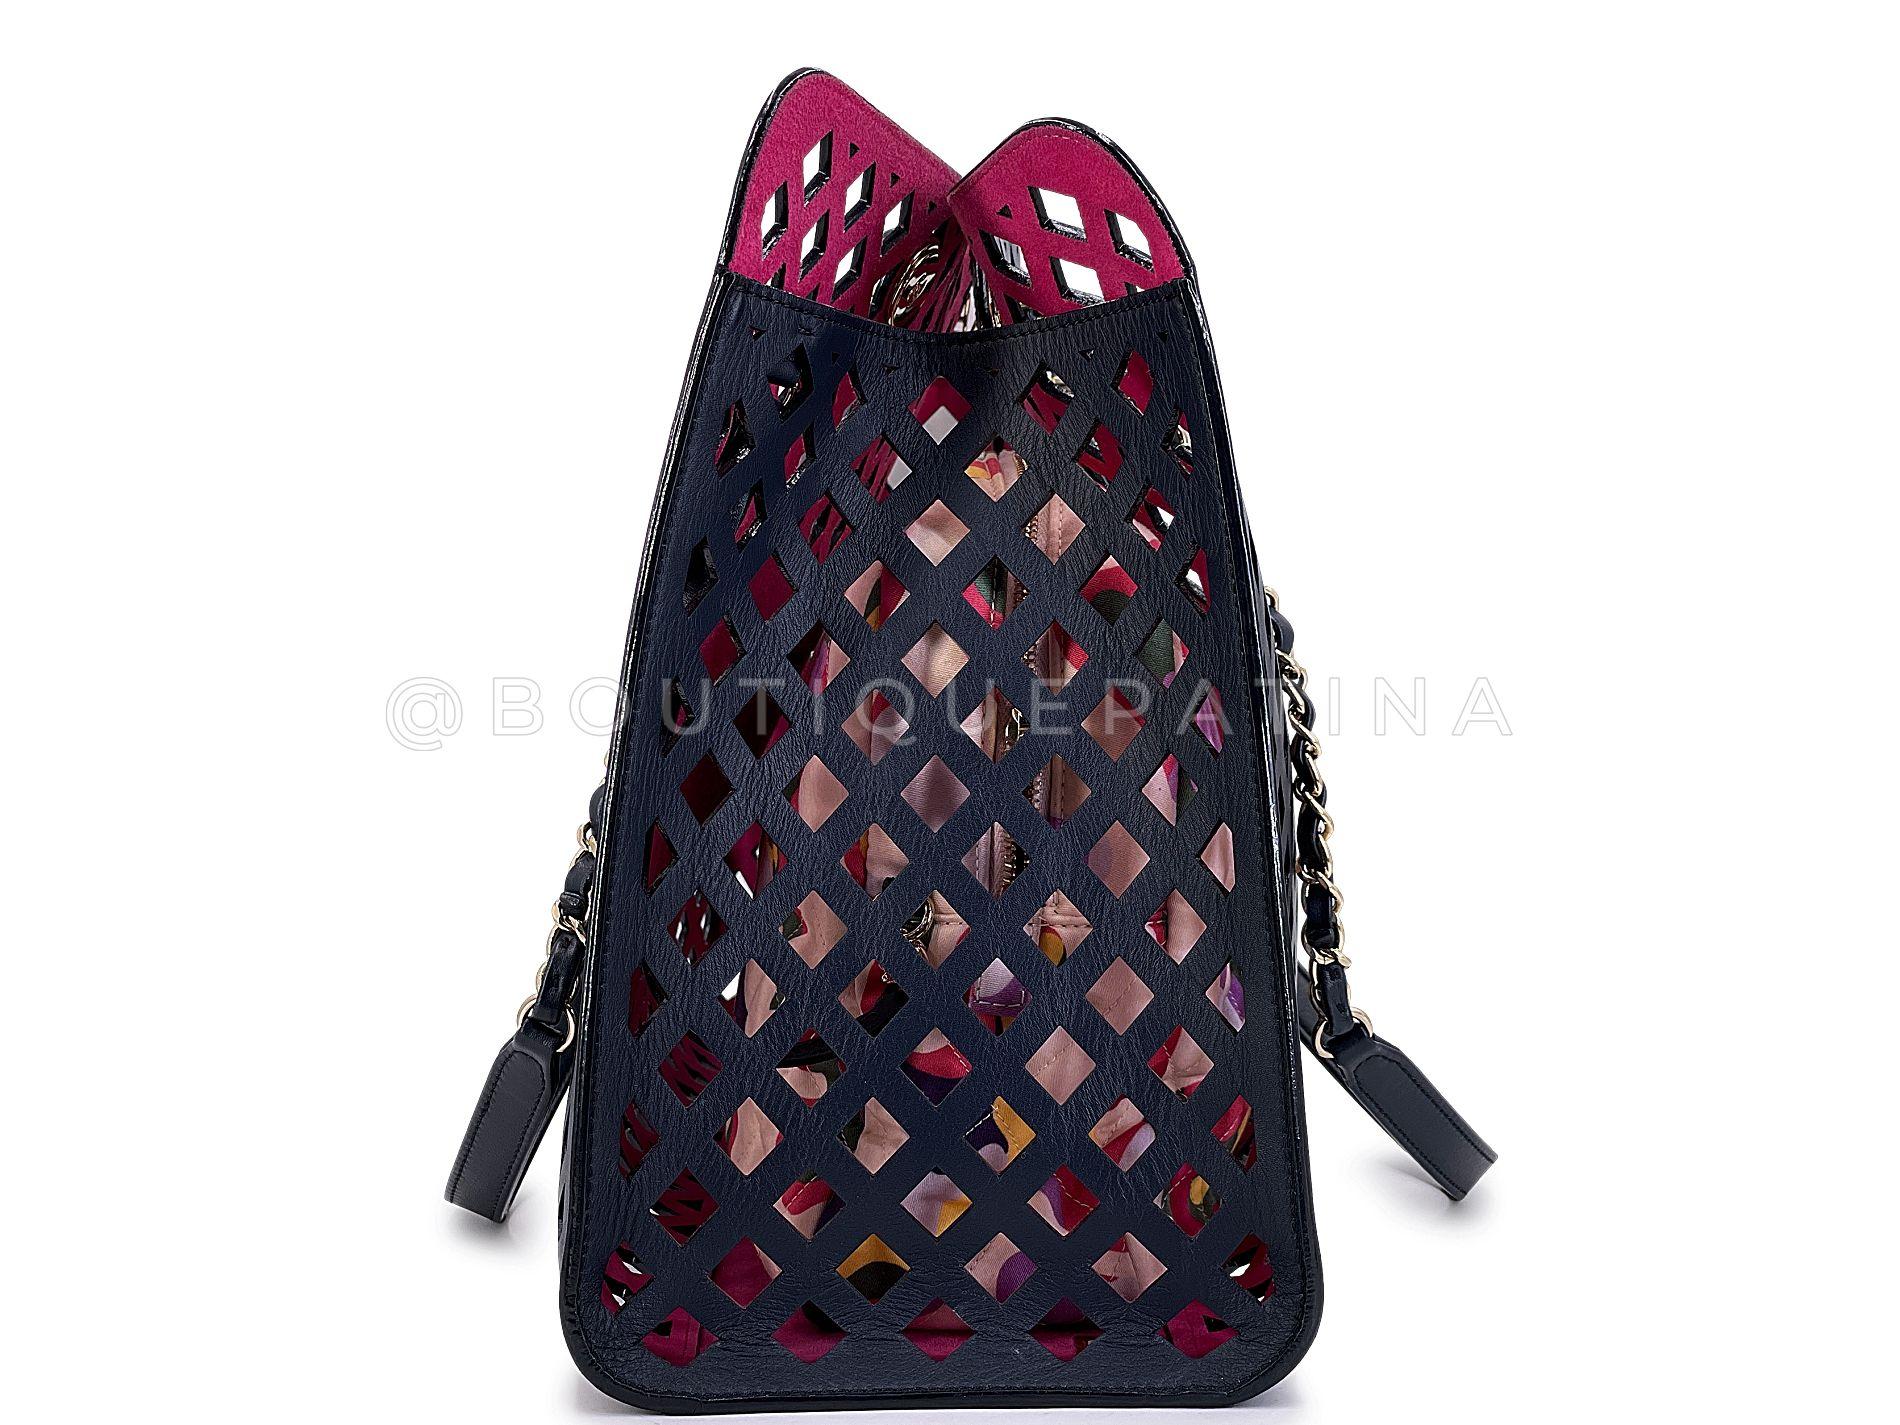 Chanel Black Fuchsia Pink Diamond Cutout Shopper Tote Bag 67861 For Sale 2